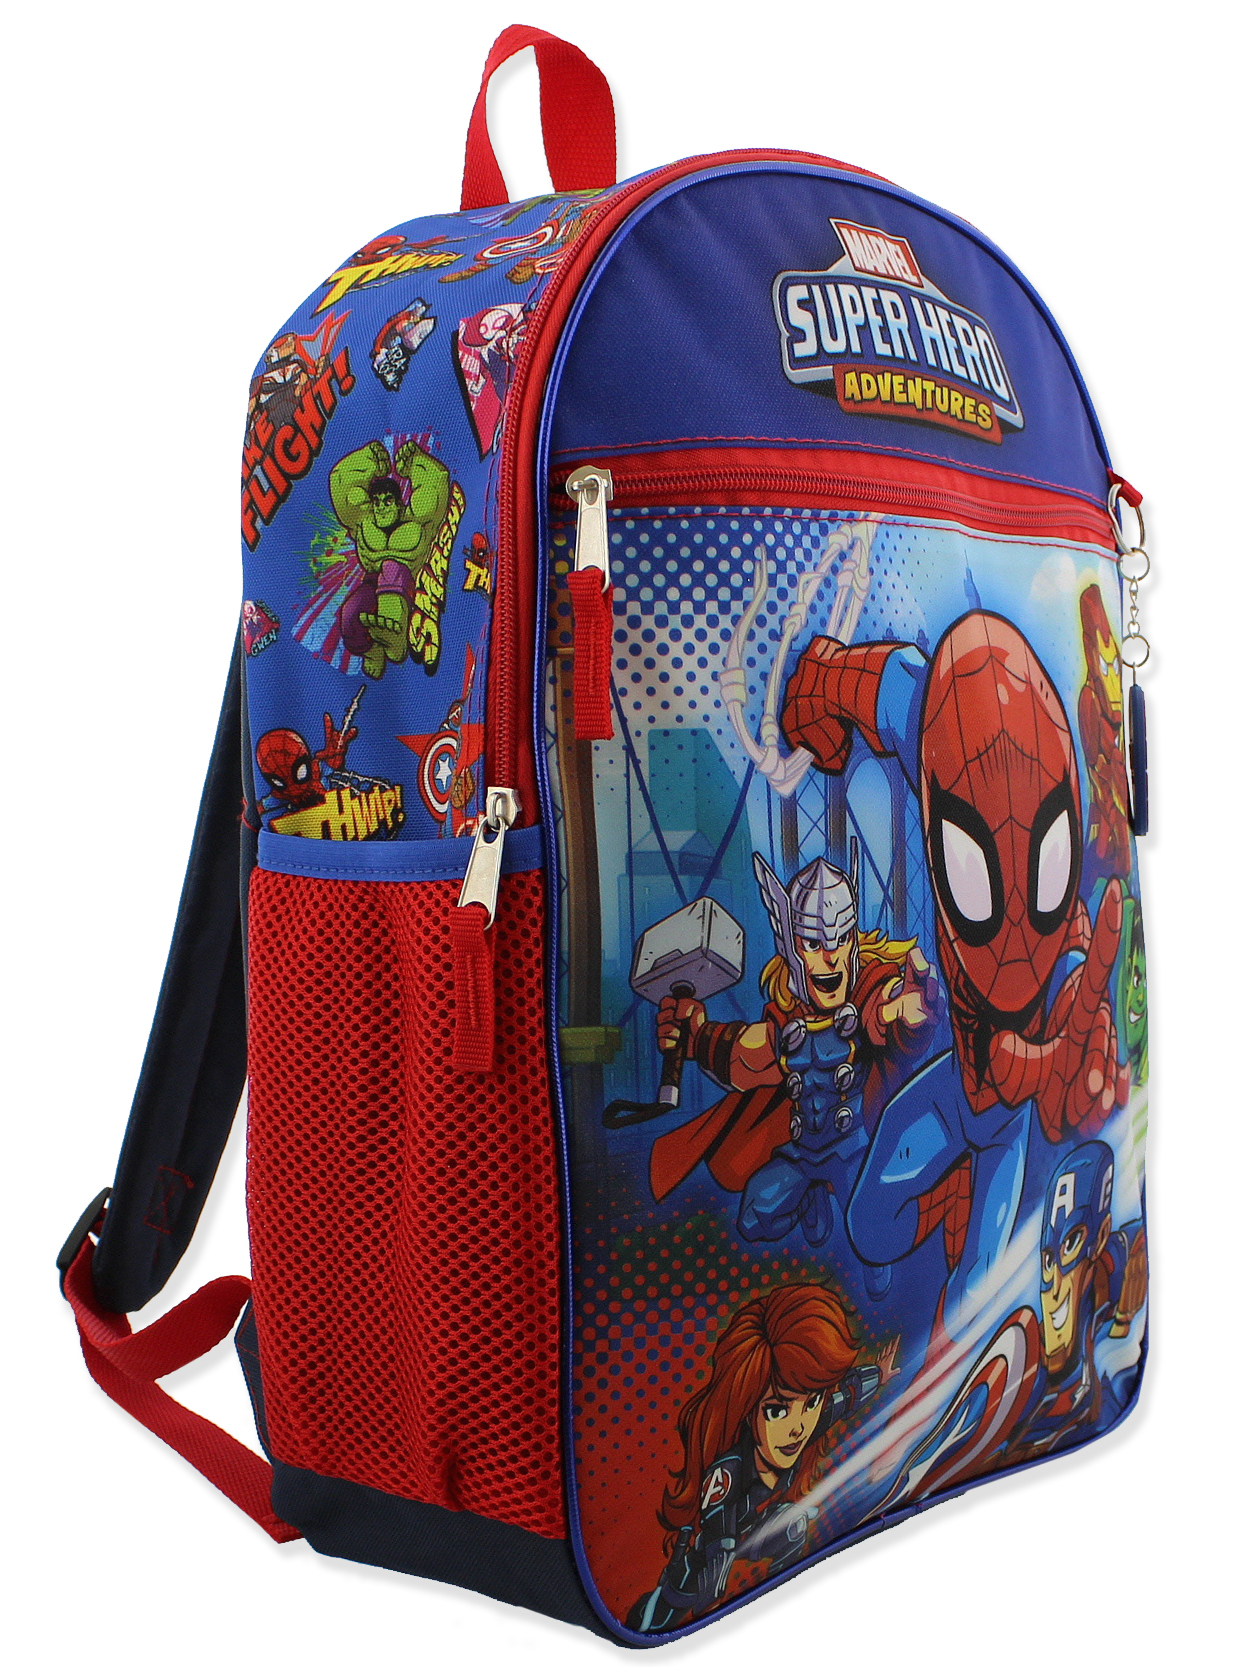 Super Hero Adventures Boys 5 piece Backpack and Snack Bag School Set MUCF5K3YT - image 4 of 7